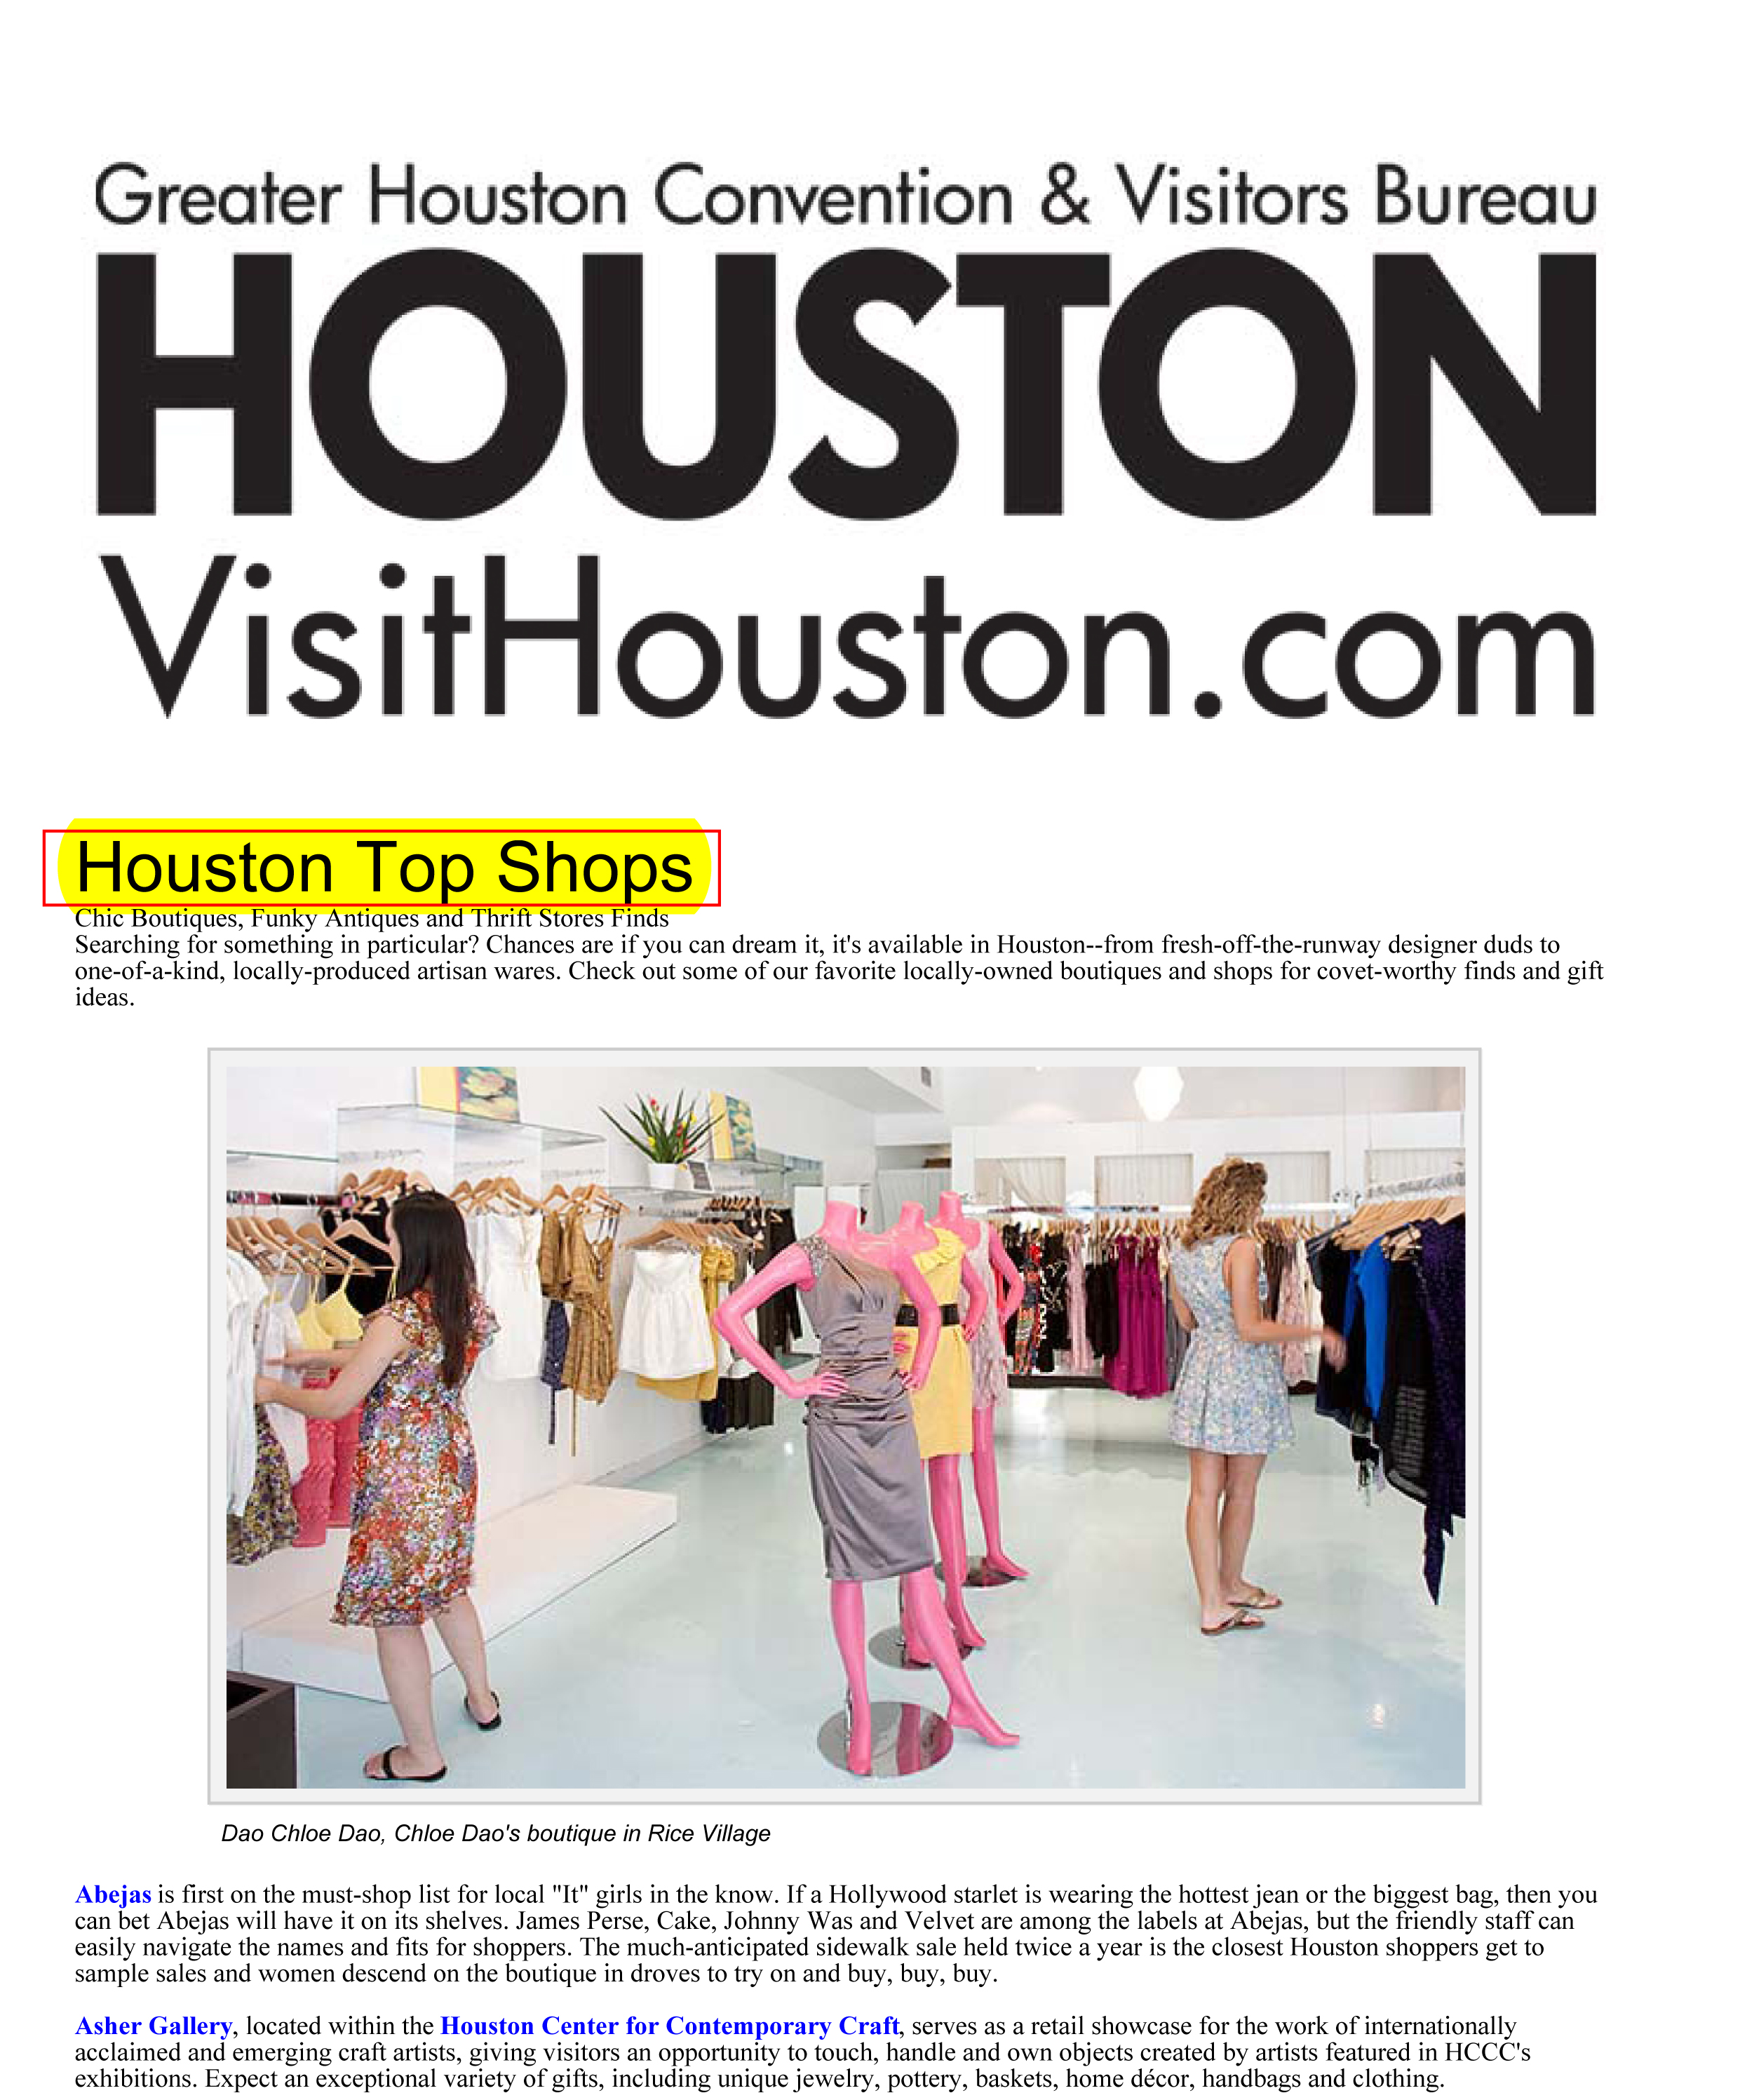 Greater Houston Convention & Visitors Bureau